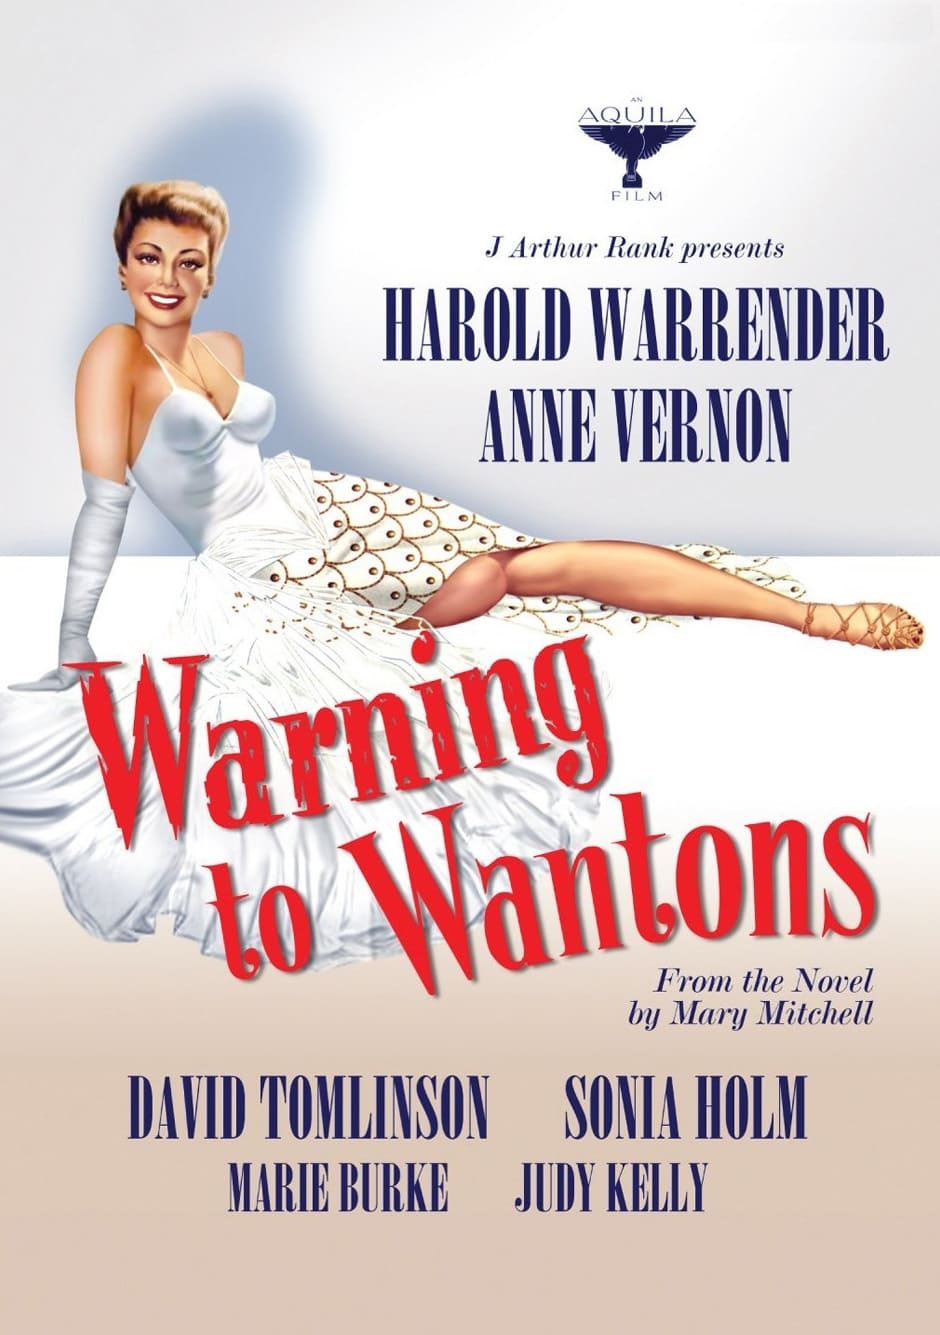 Warning to Wantons